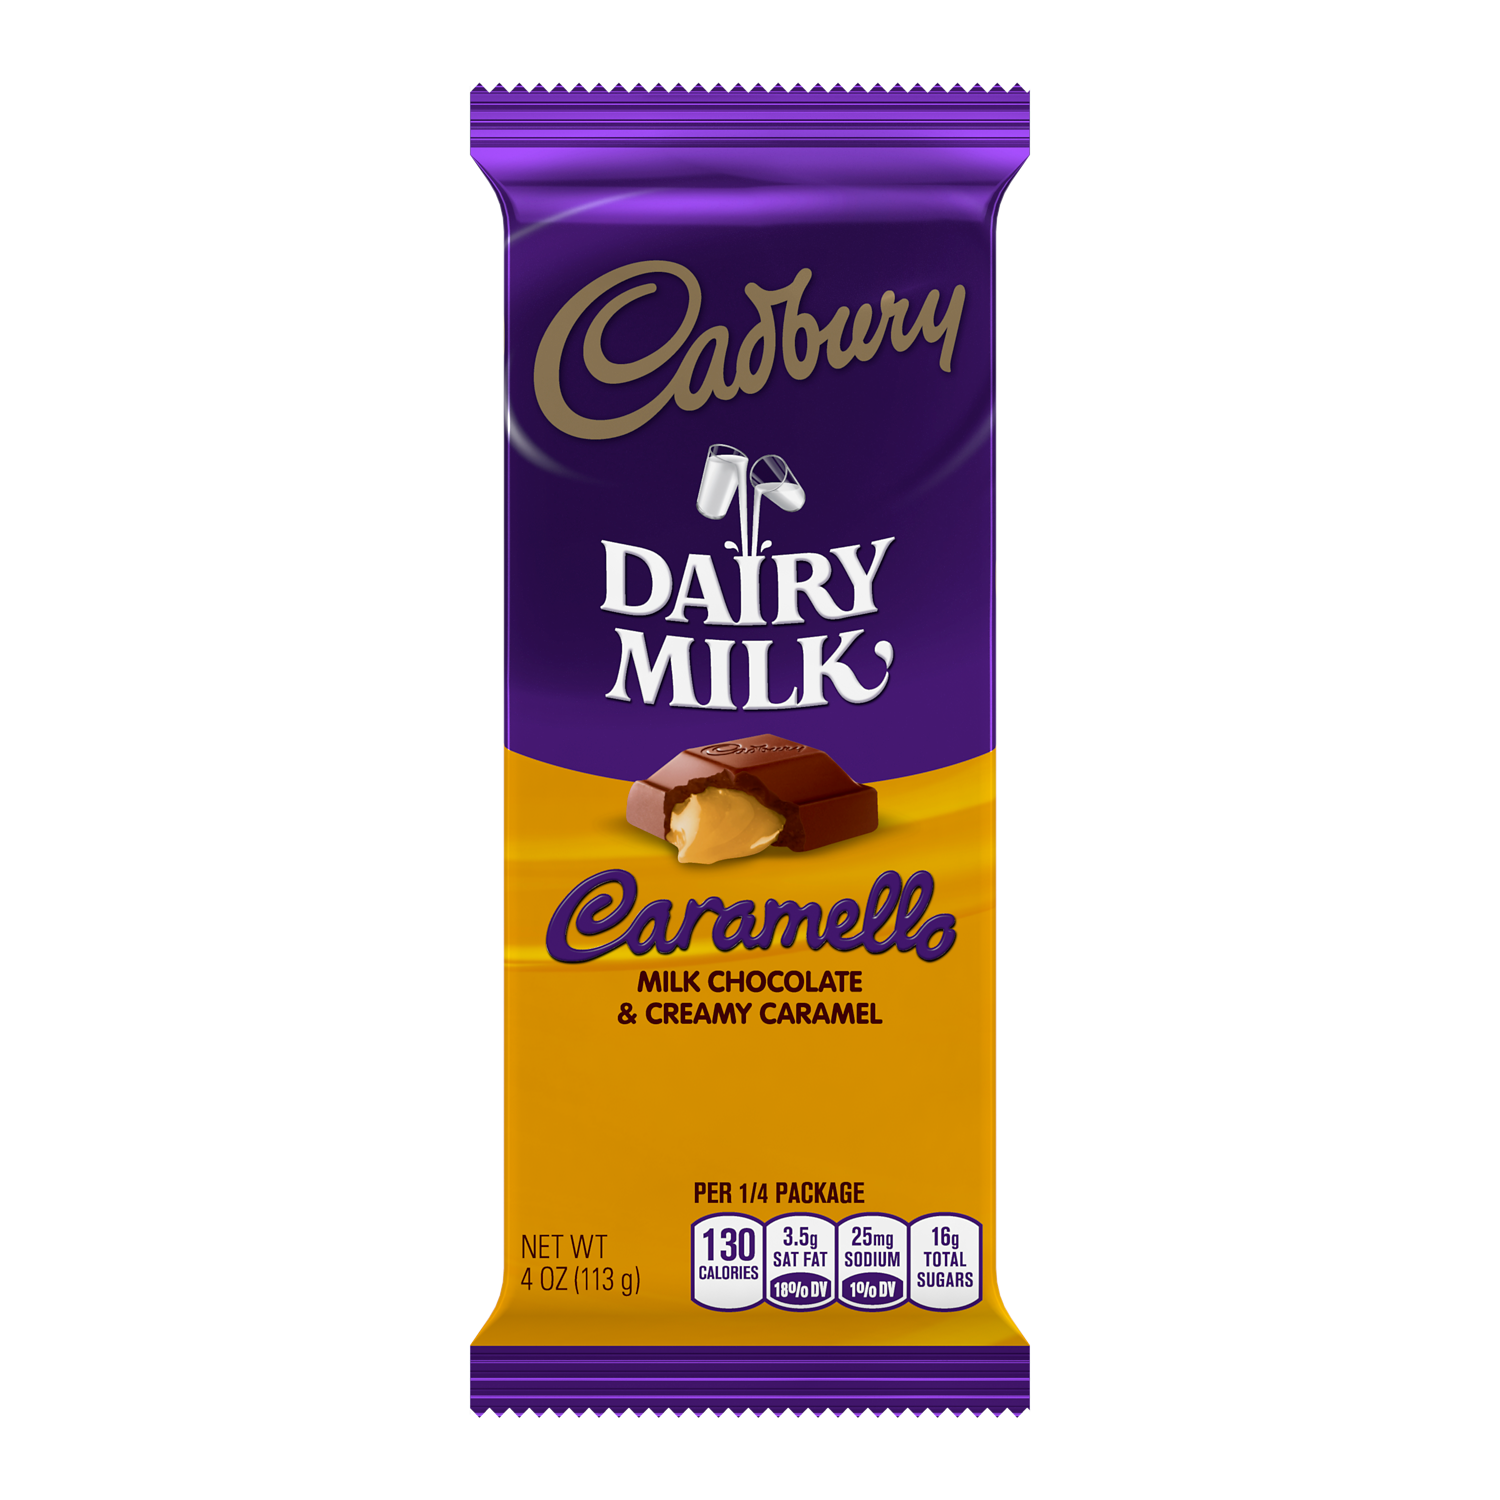 CADBURY DAIRY MILK CARAMELLO Caramel and Milk Chocolate Candy Bar, 4 oz - Front of Package